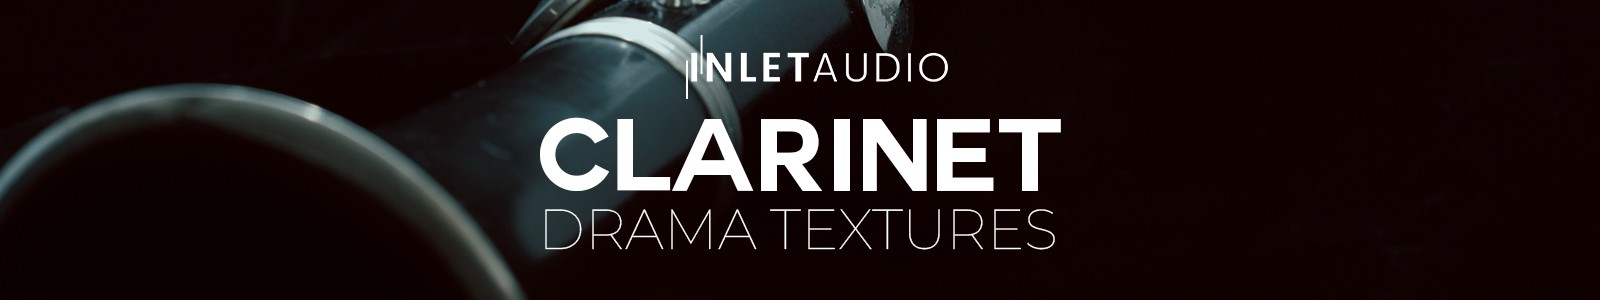 Inlet Audio Clarinet Drama Textures